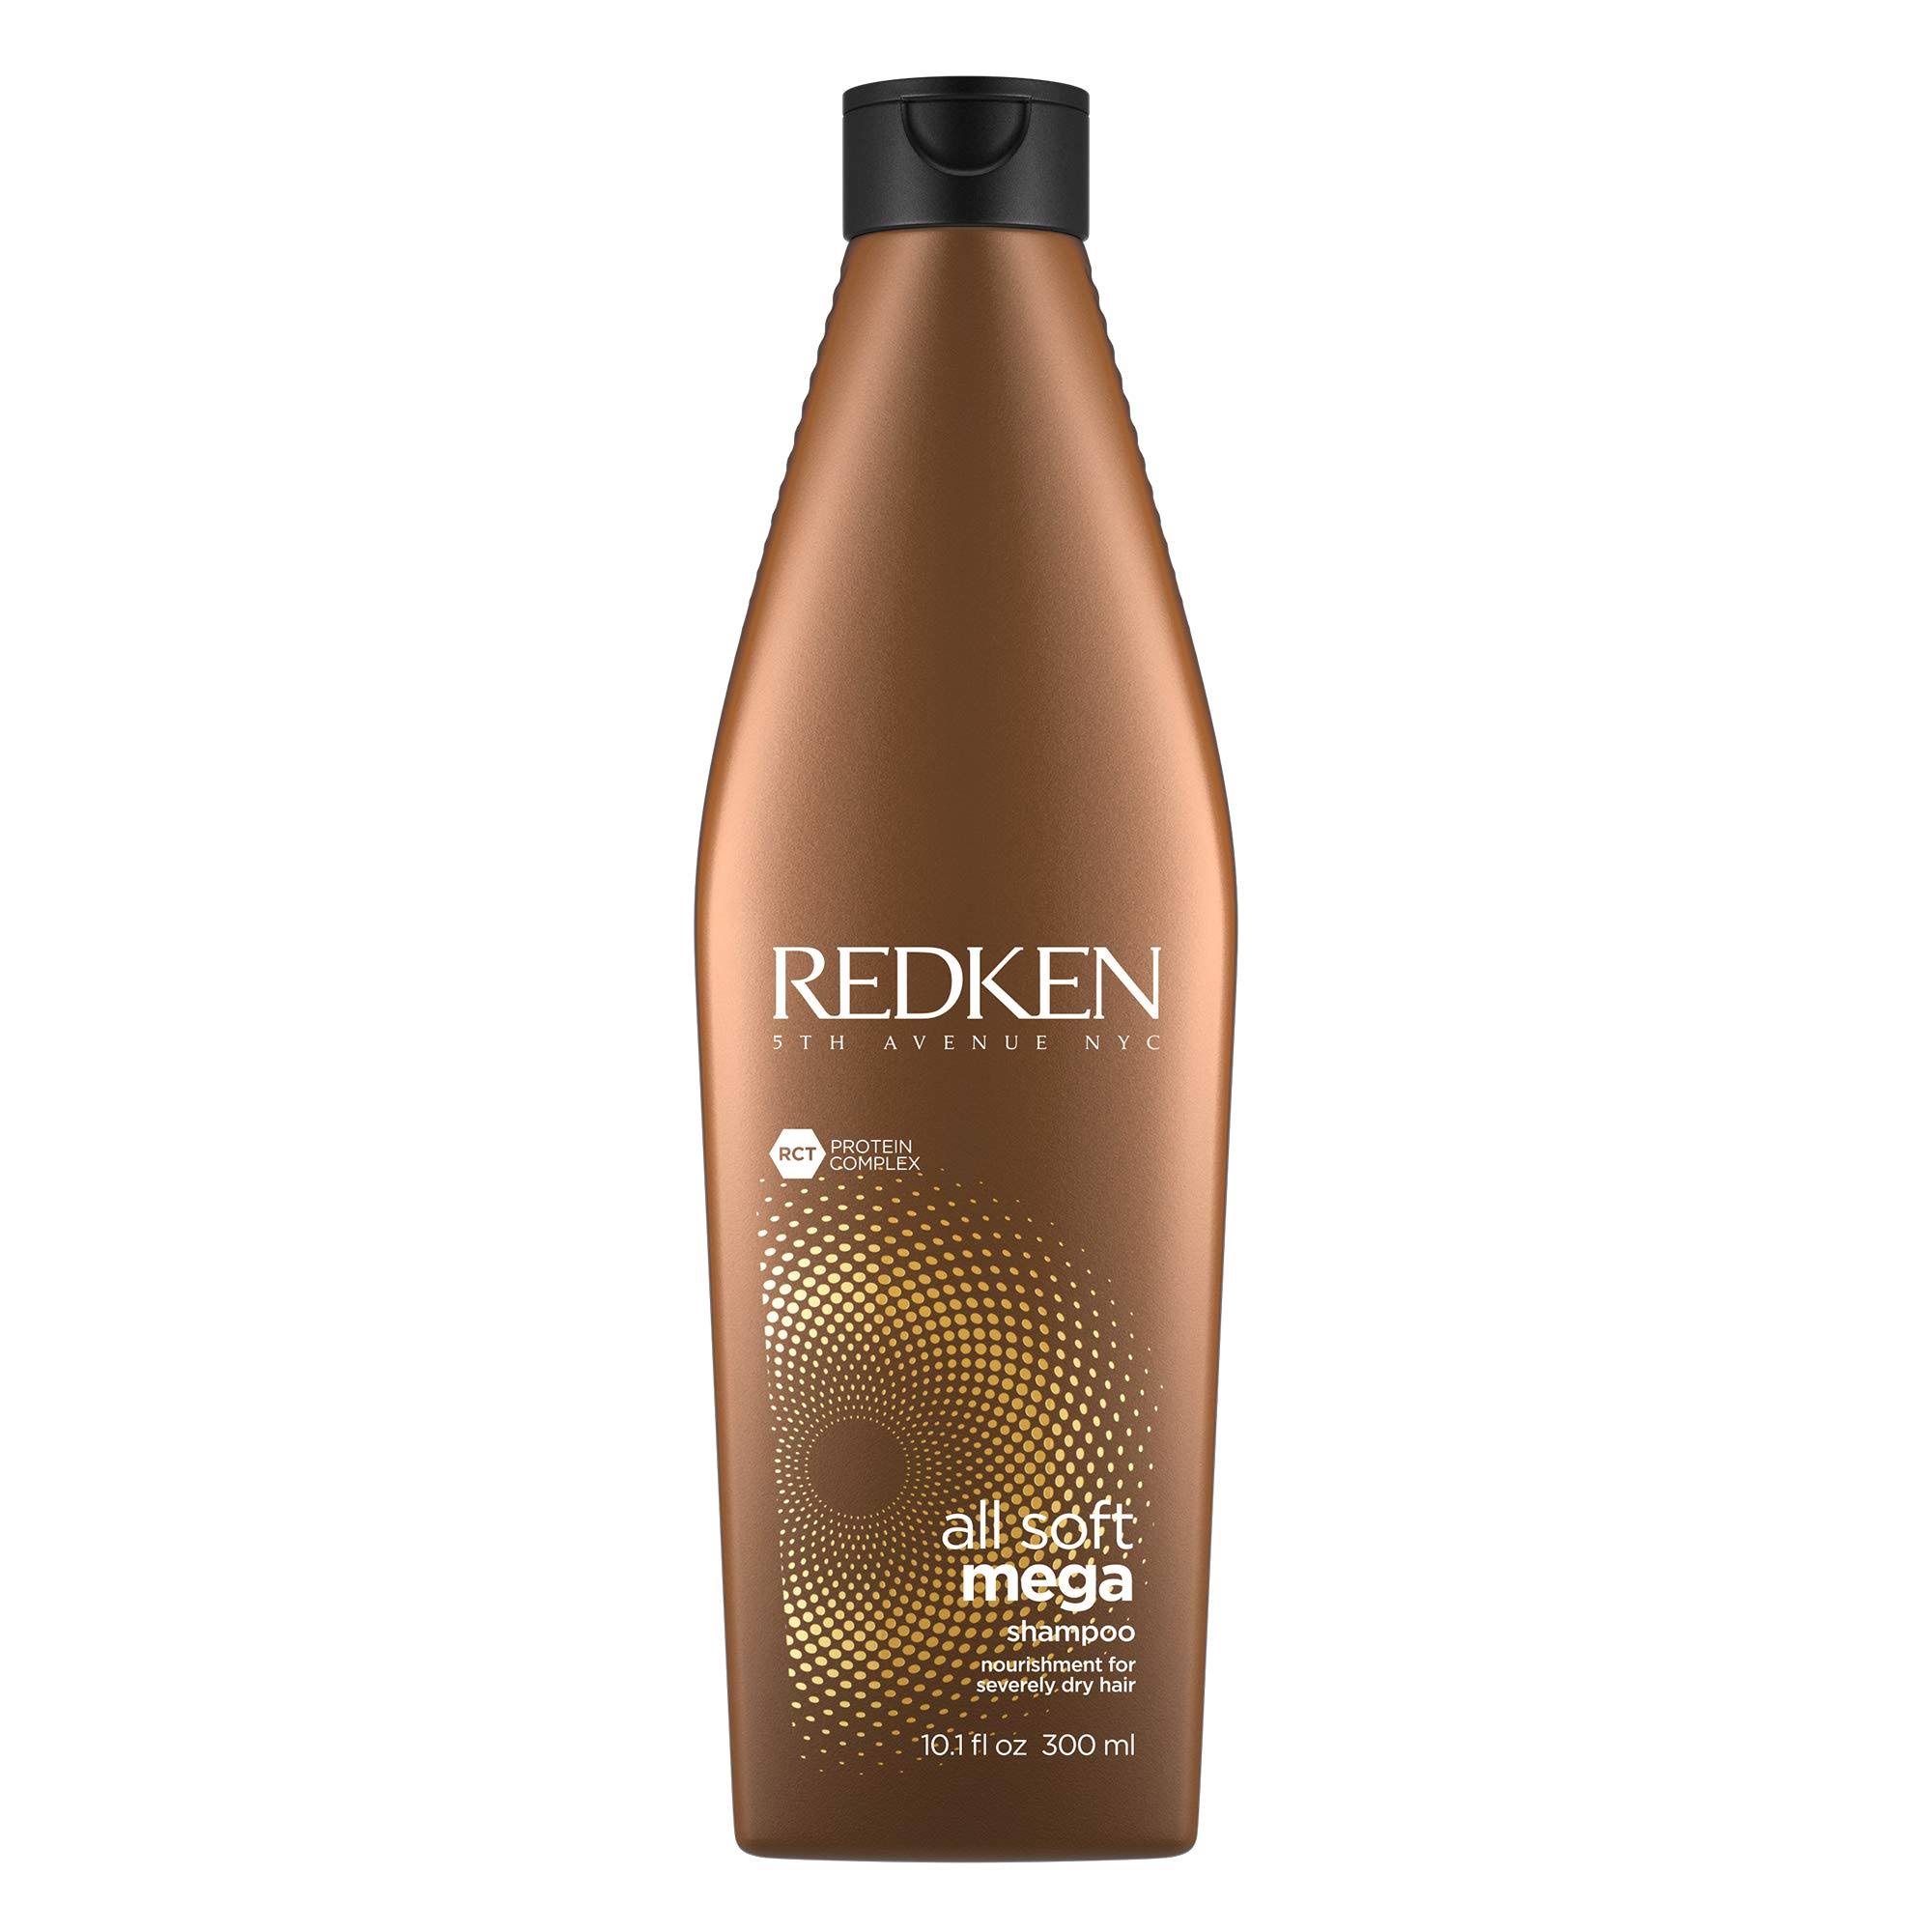 Redken All Soft Mega Shampoo - 10.1oz